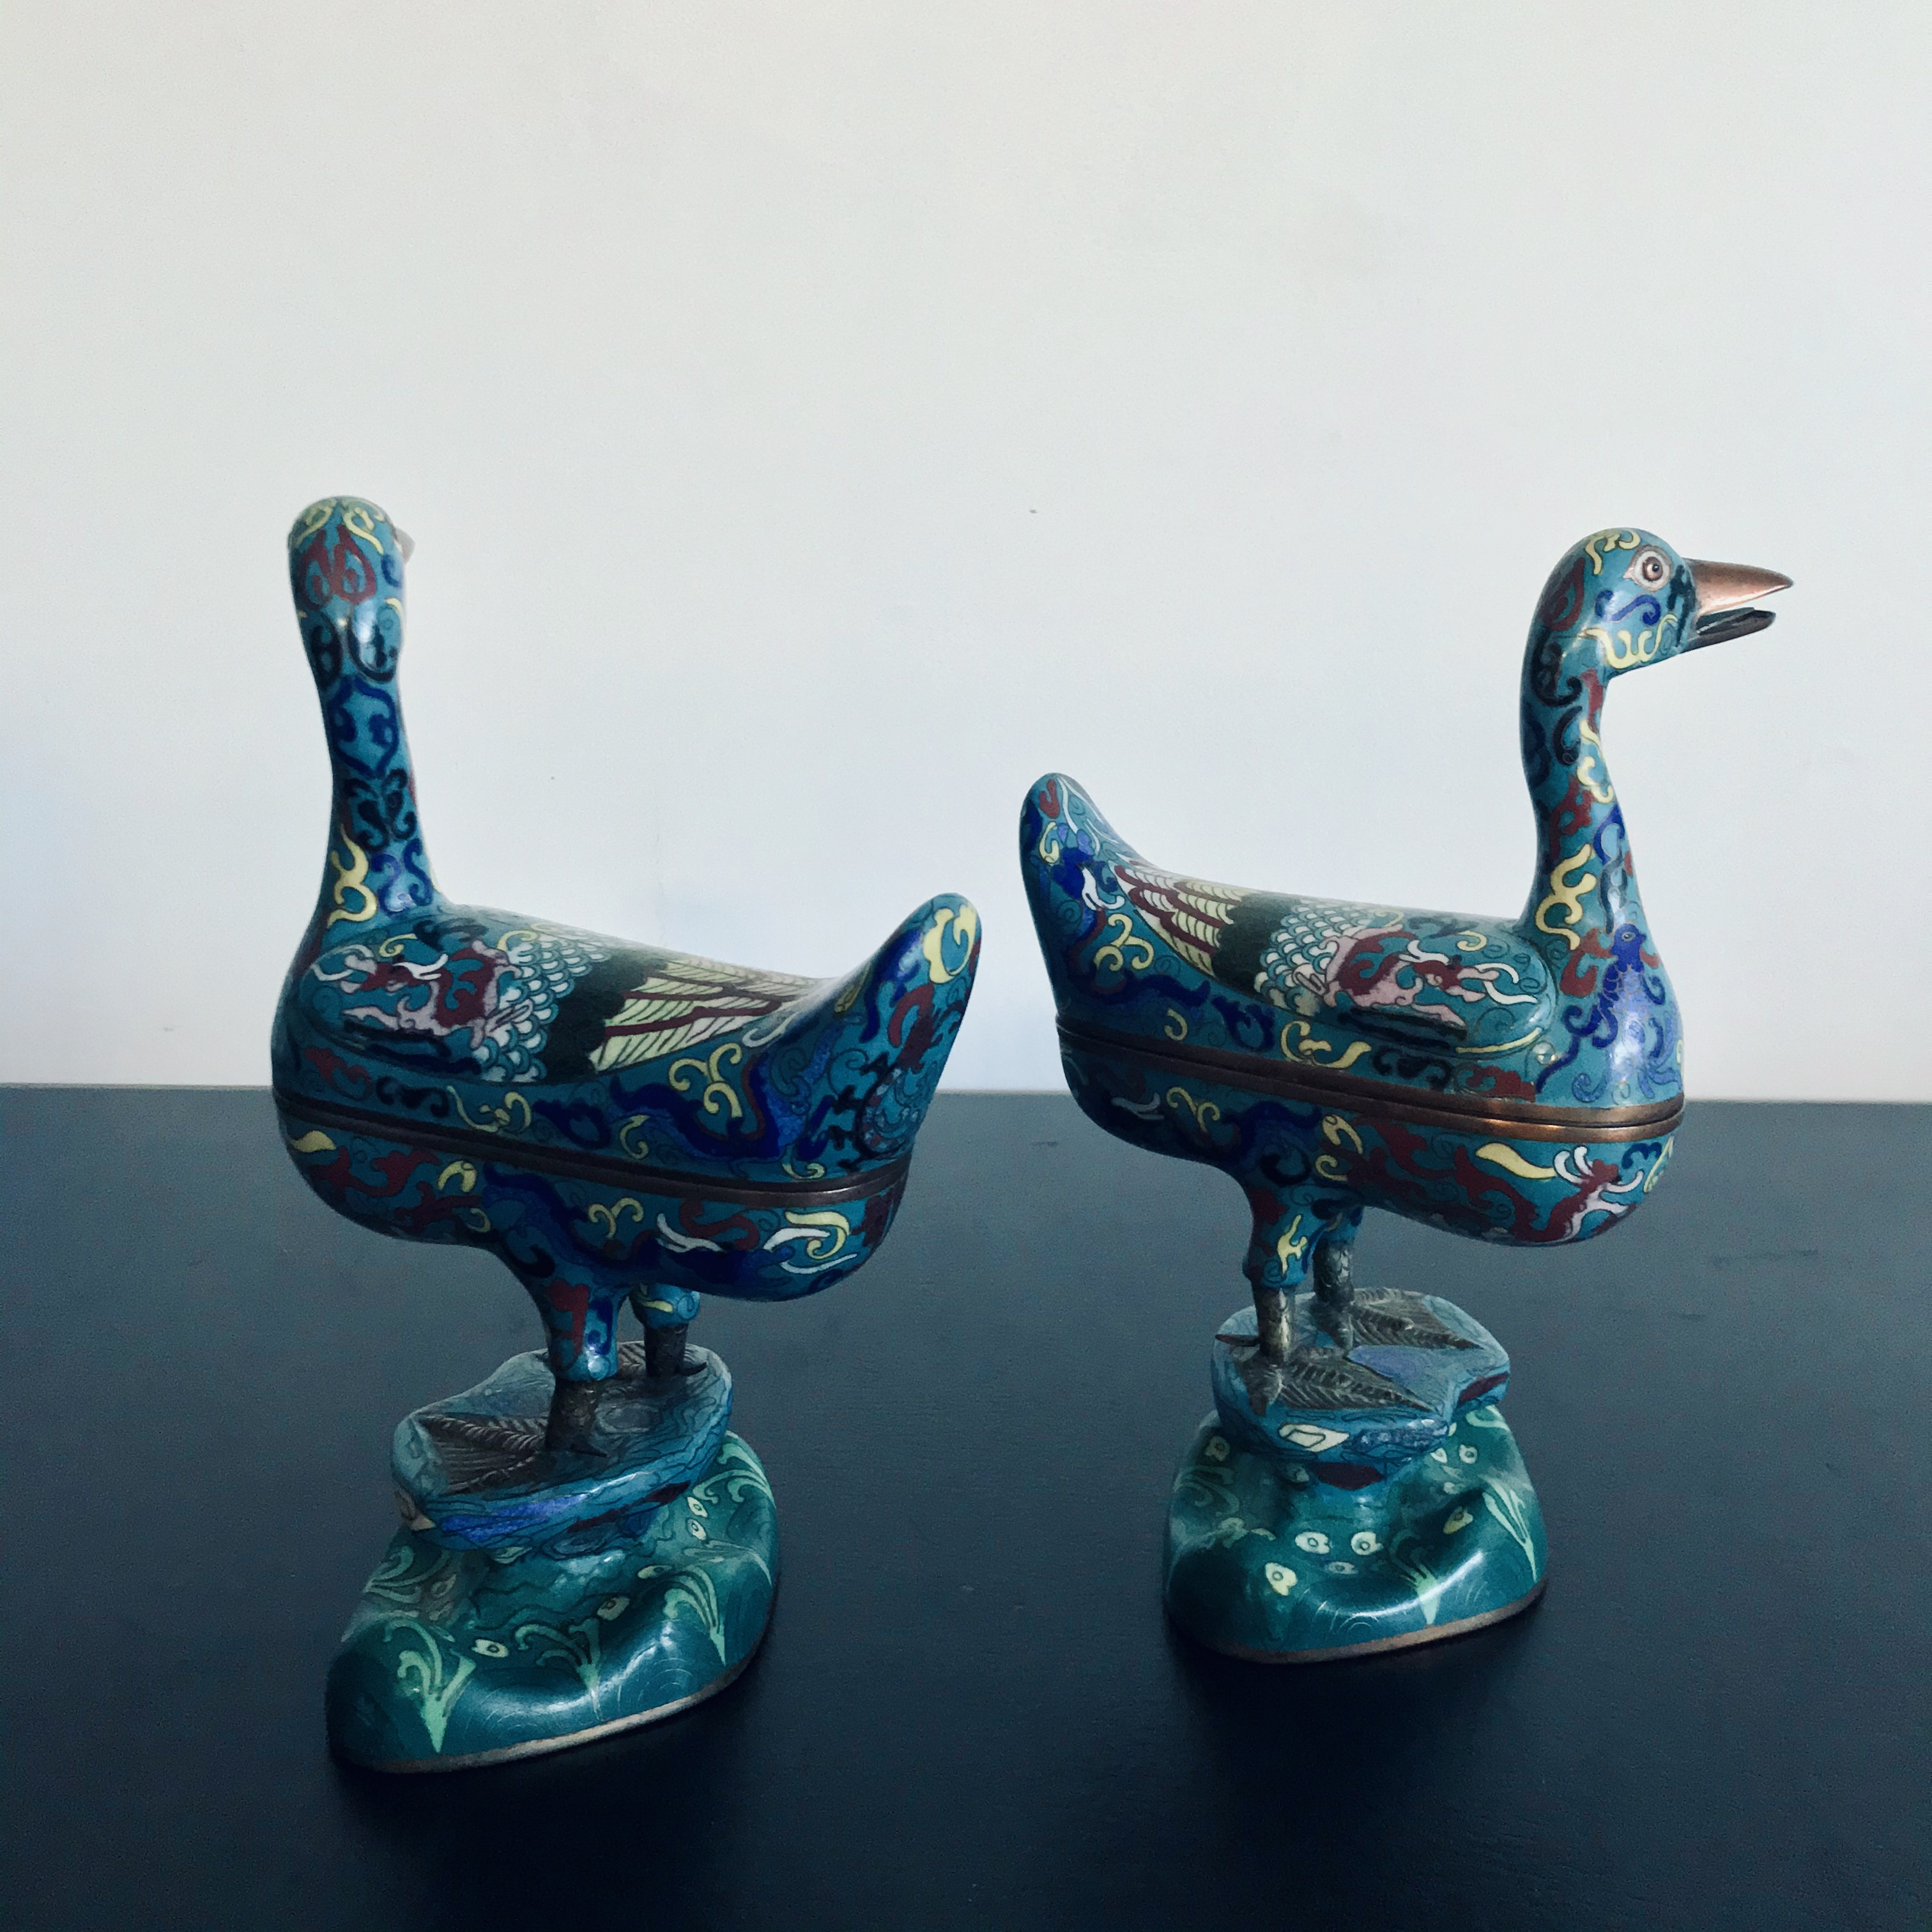 A Fine Pair of Cloisonné Duck Censers, 19th Century